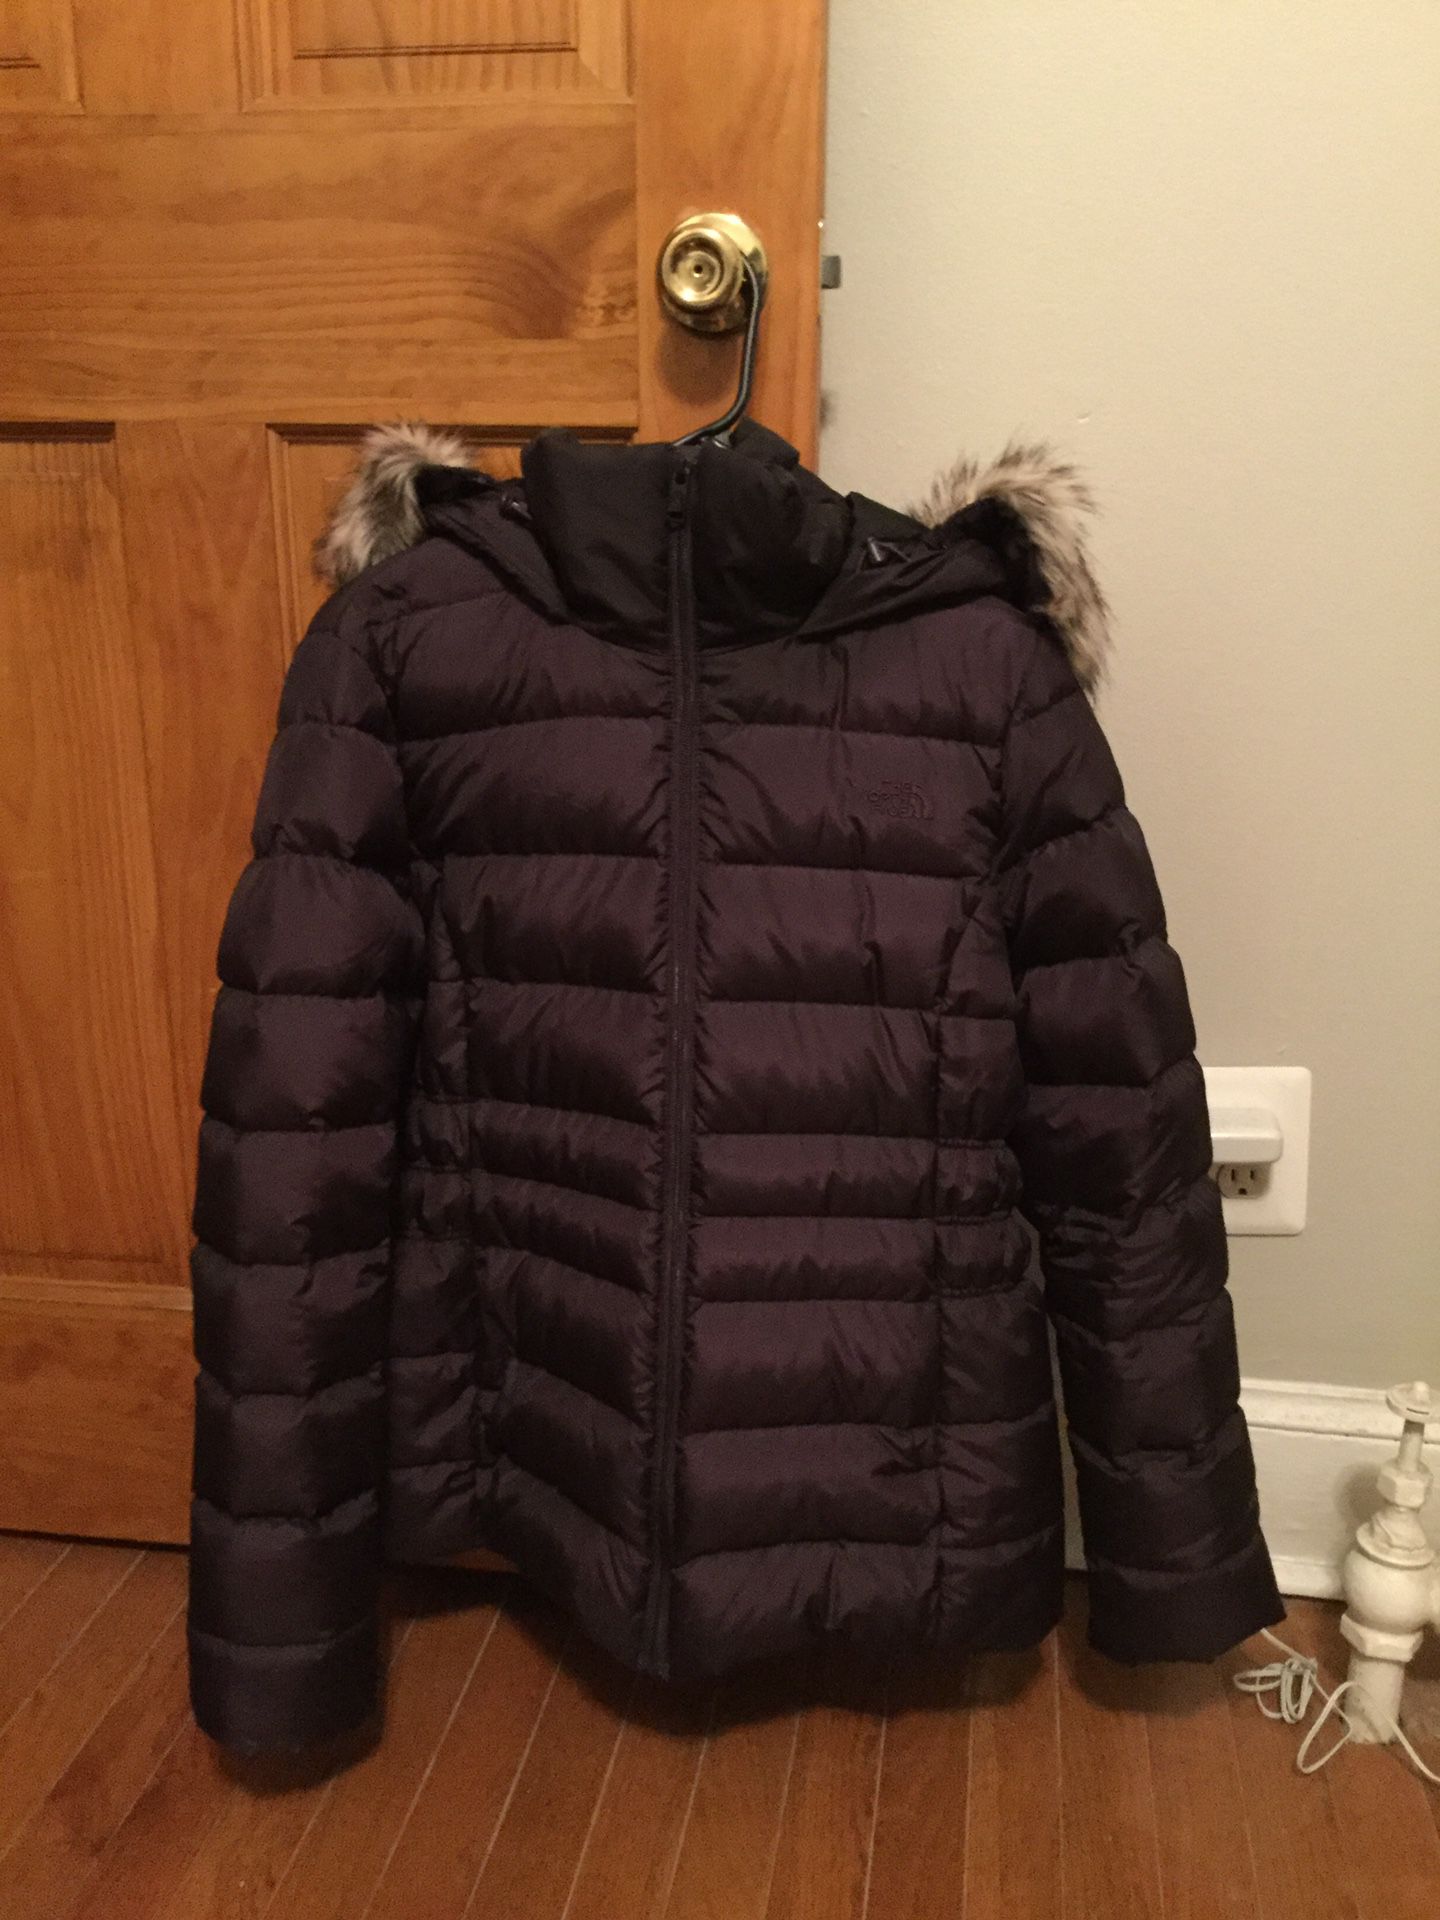 Women’s North Face Winter Coat